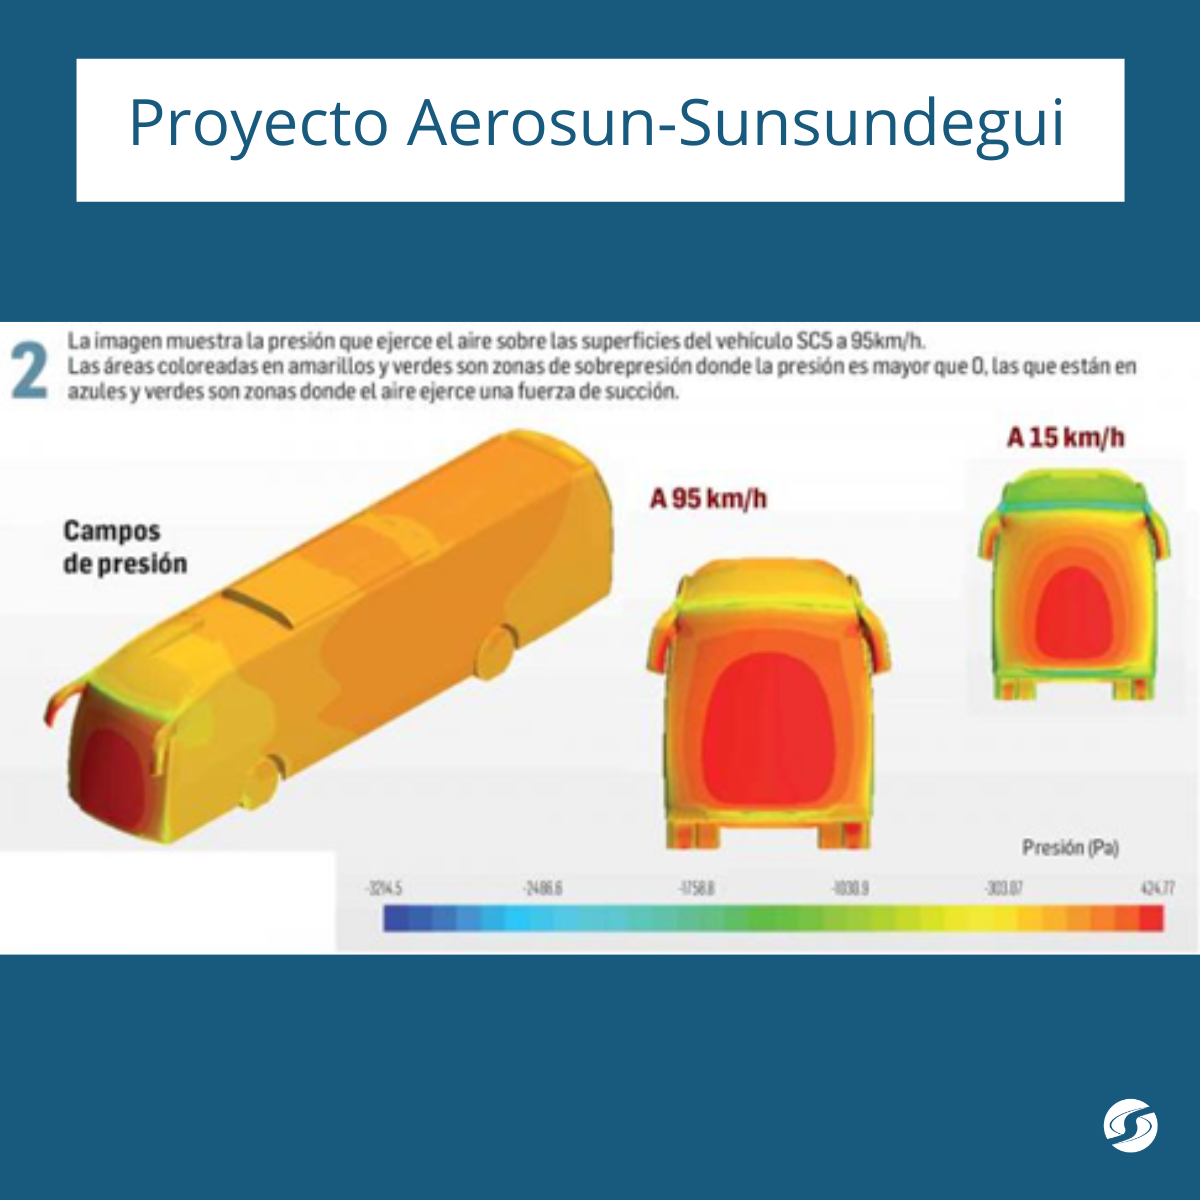 Proyecto Aerosun-Sunsundegui (2)